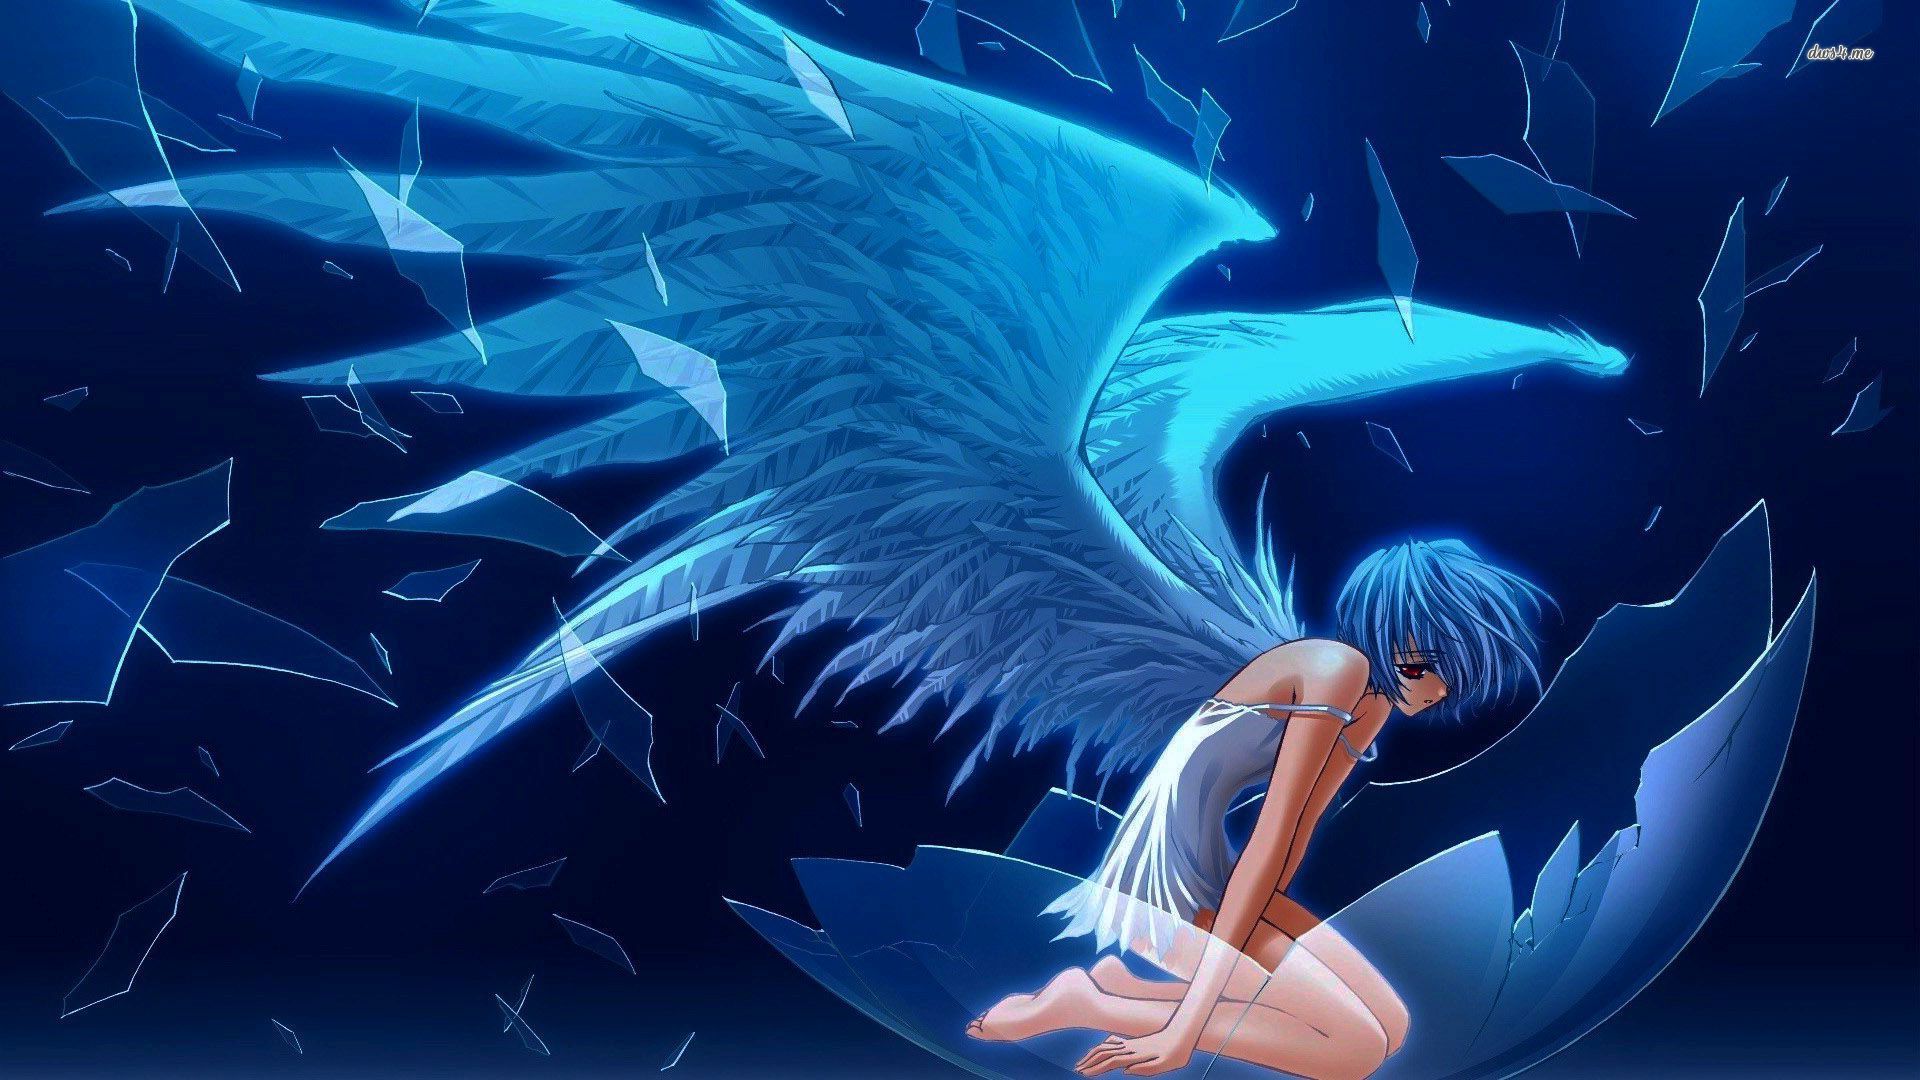 blue anime wallpaper,cg artwork,fictional character,illustration,anime,mythical creature